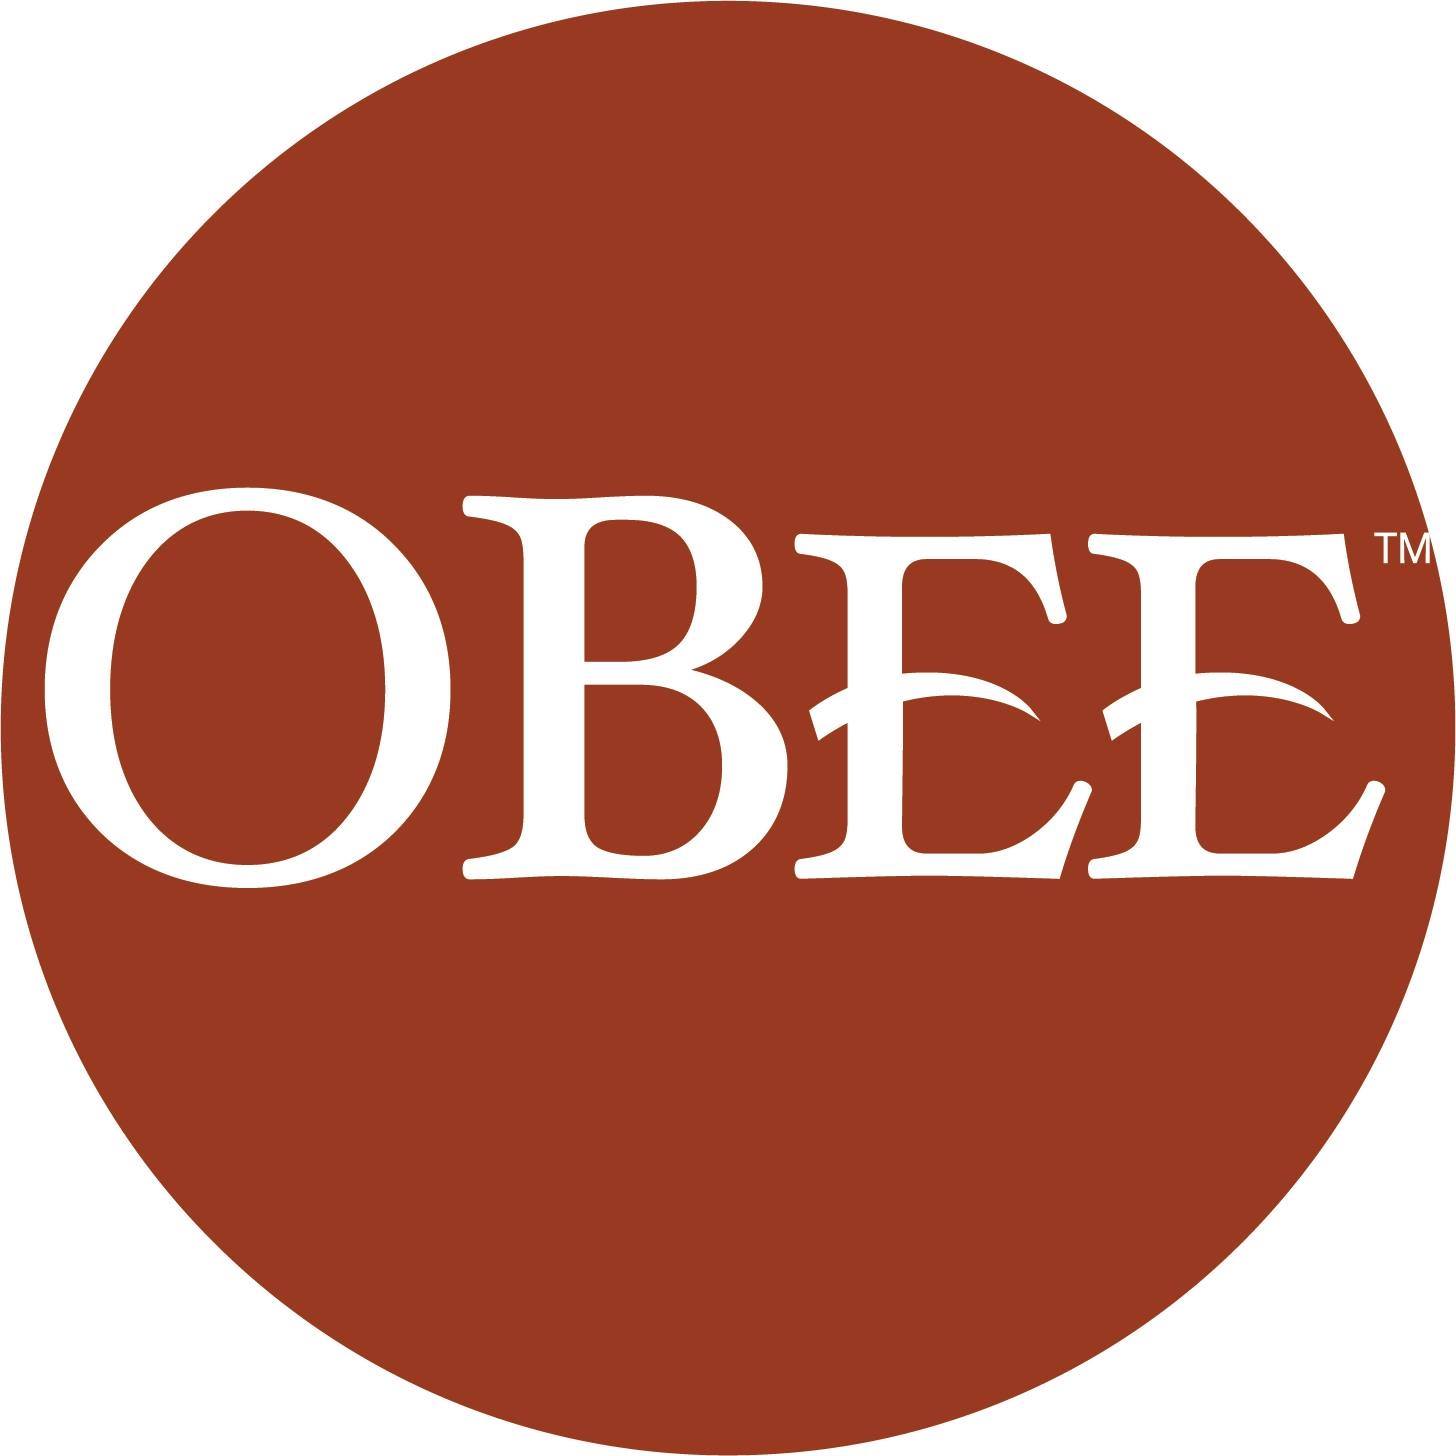 O Bee Credit Union